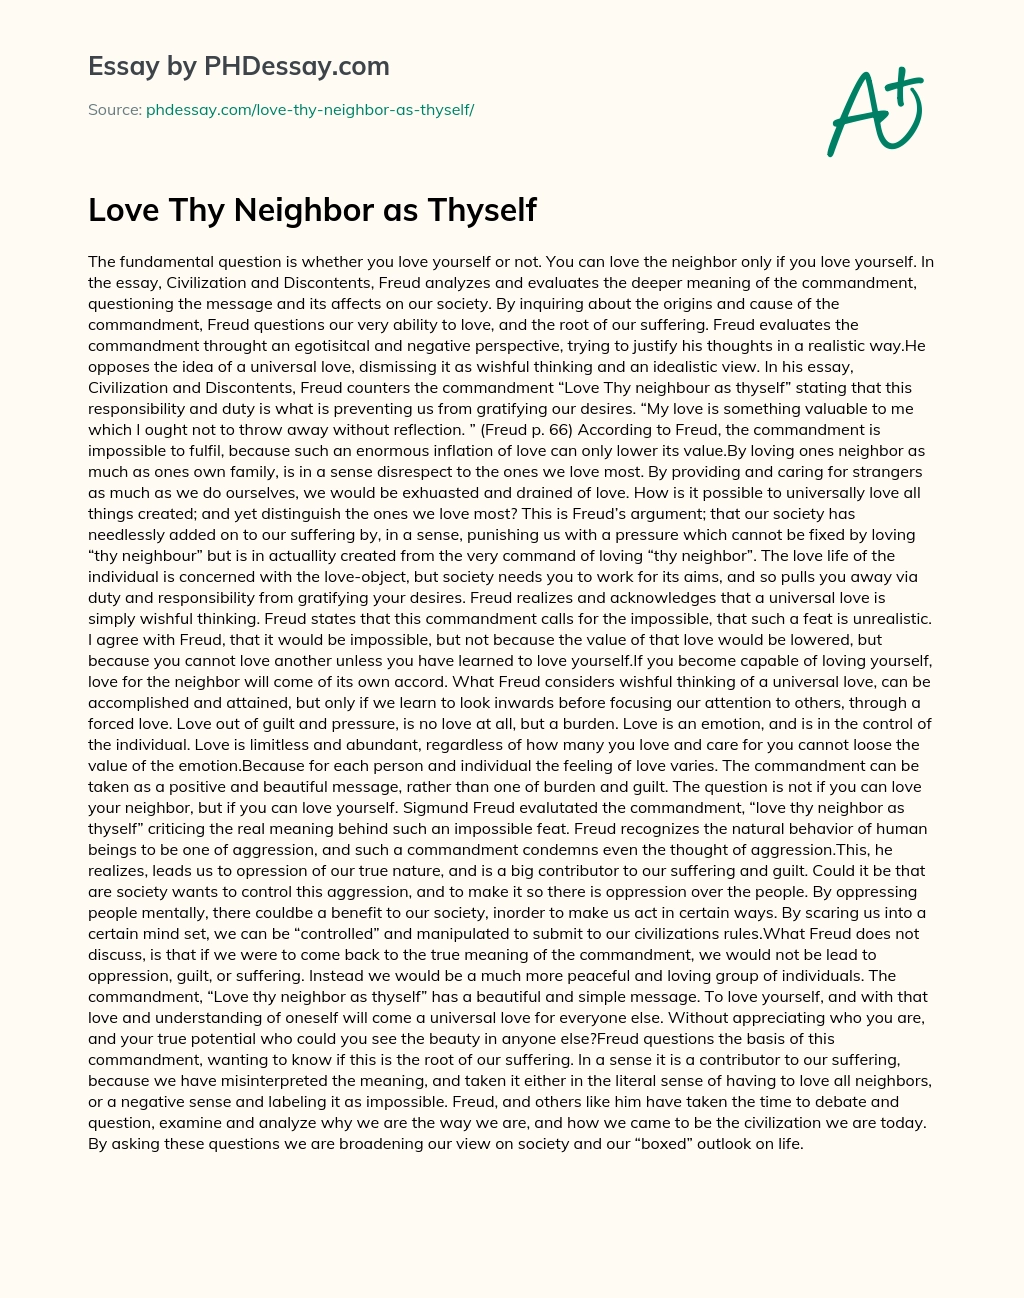 Love Thy Neighbor as Thyself essay